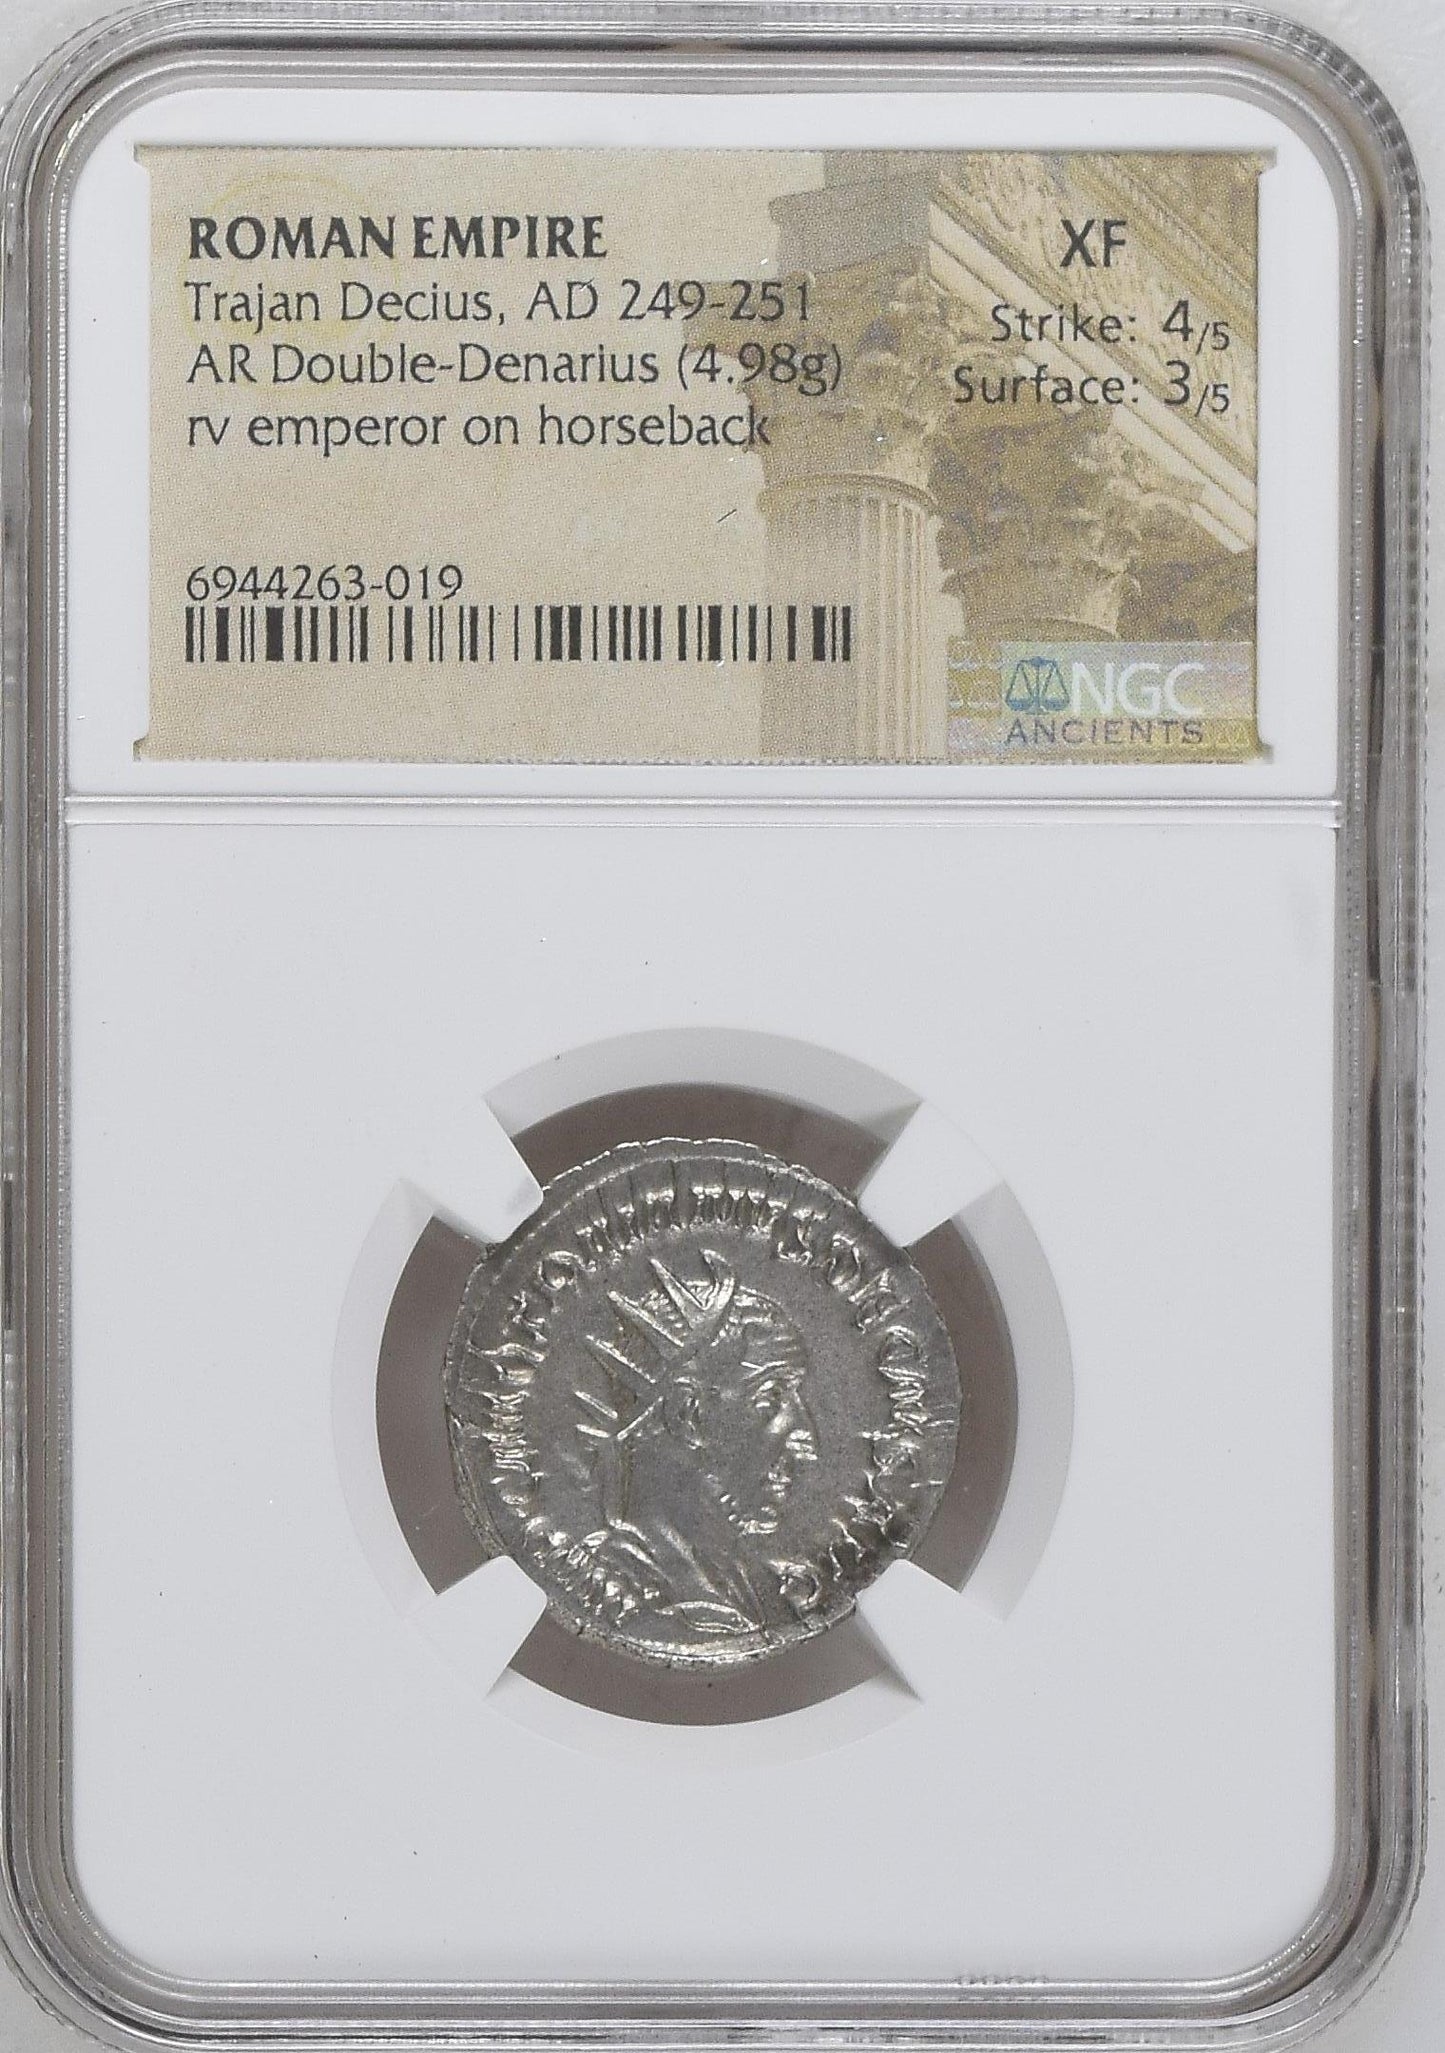 Roman Empire - Trajan Decius - Silver Double-Denarius - NGC XF - RIC:11b